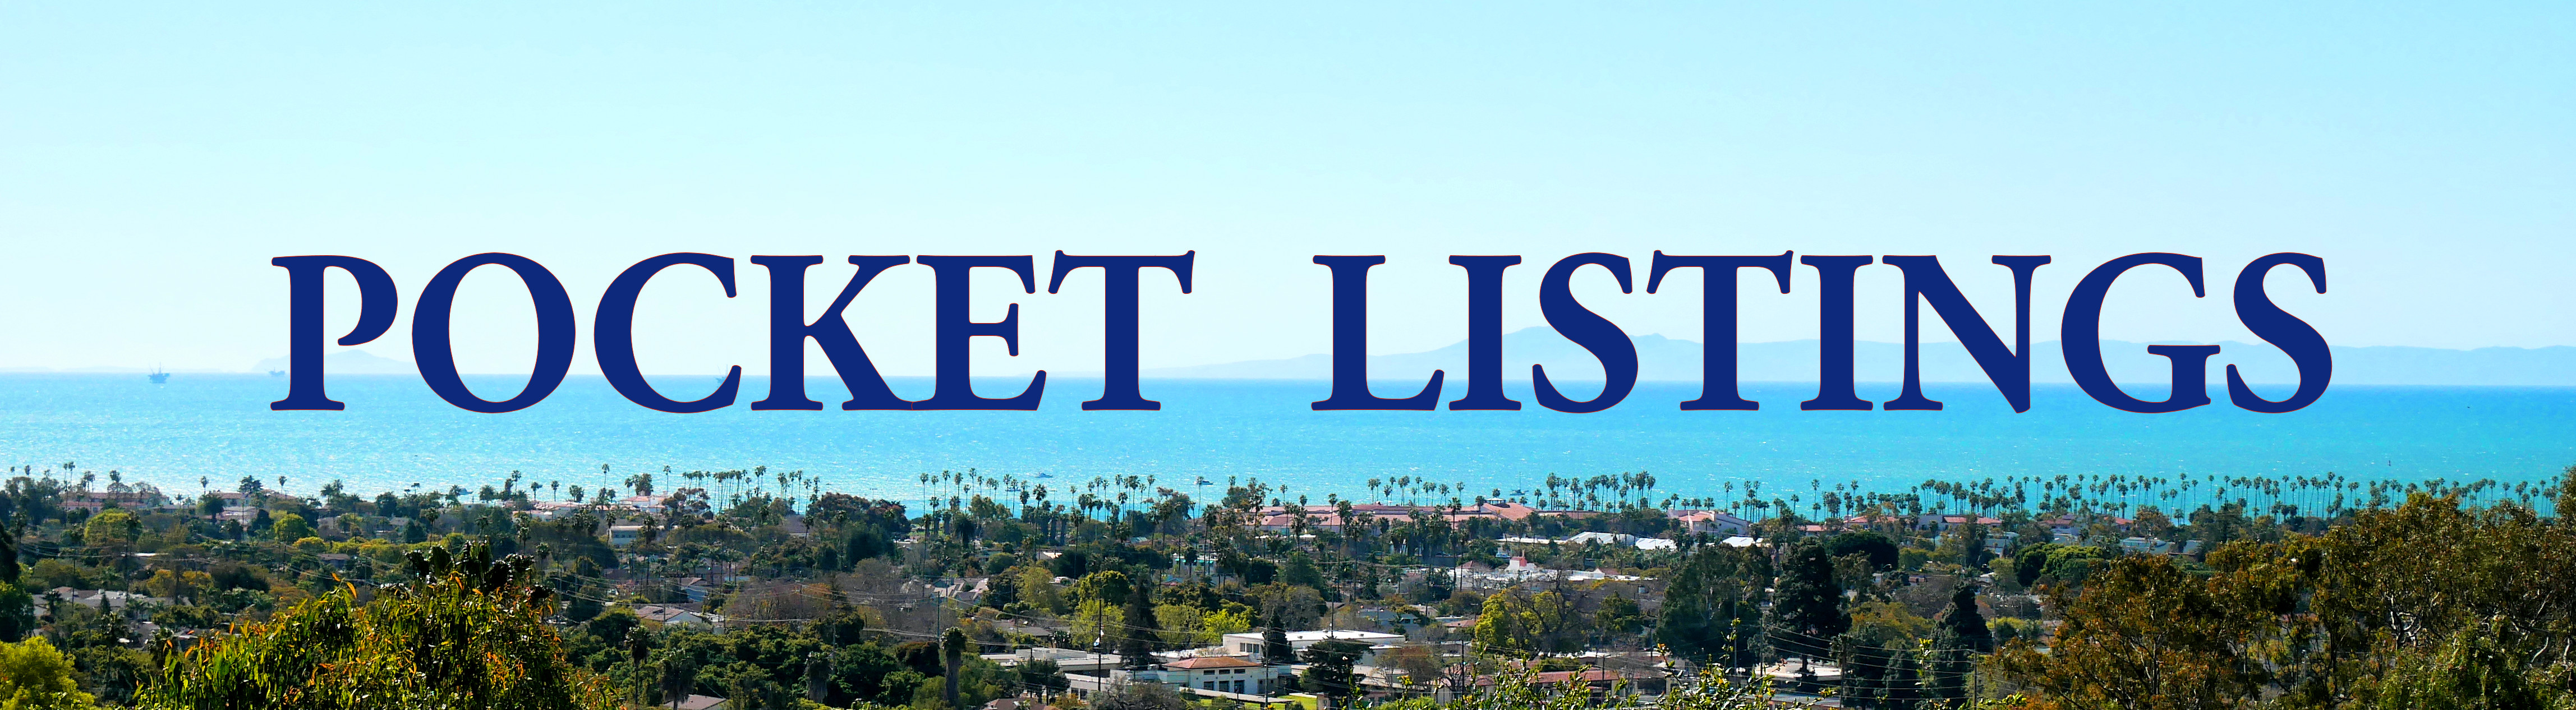 View of Santa Barbara Coastline featuring pocket listings